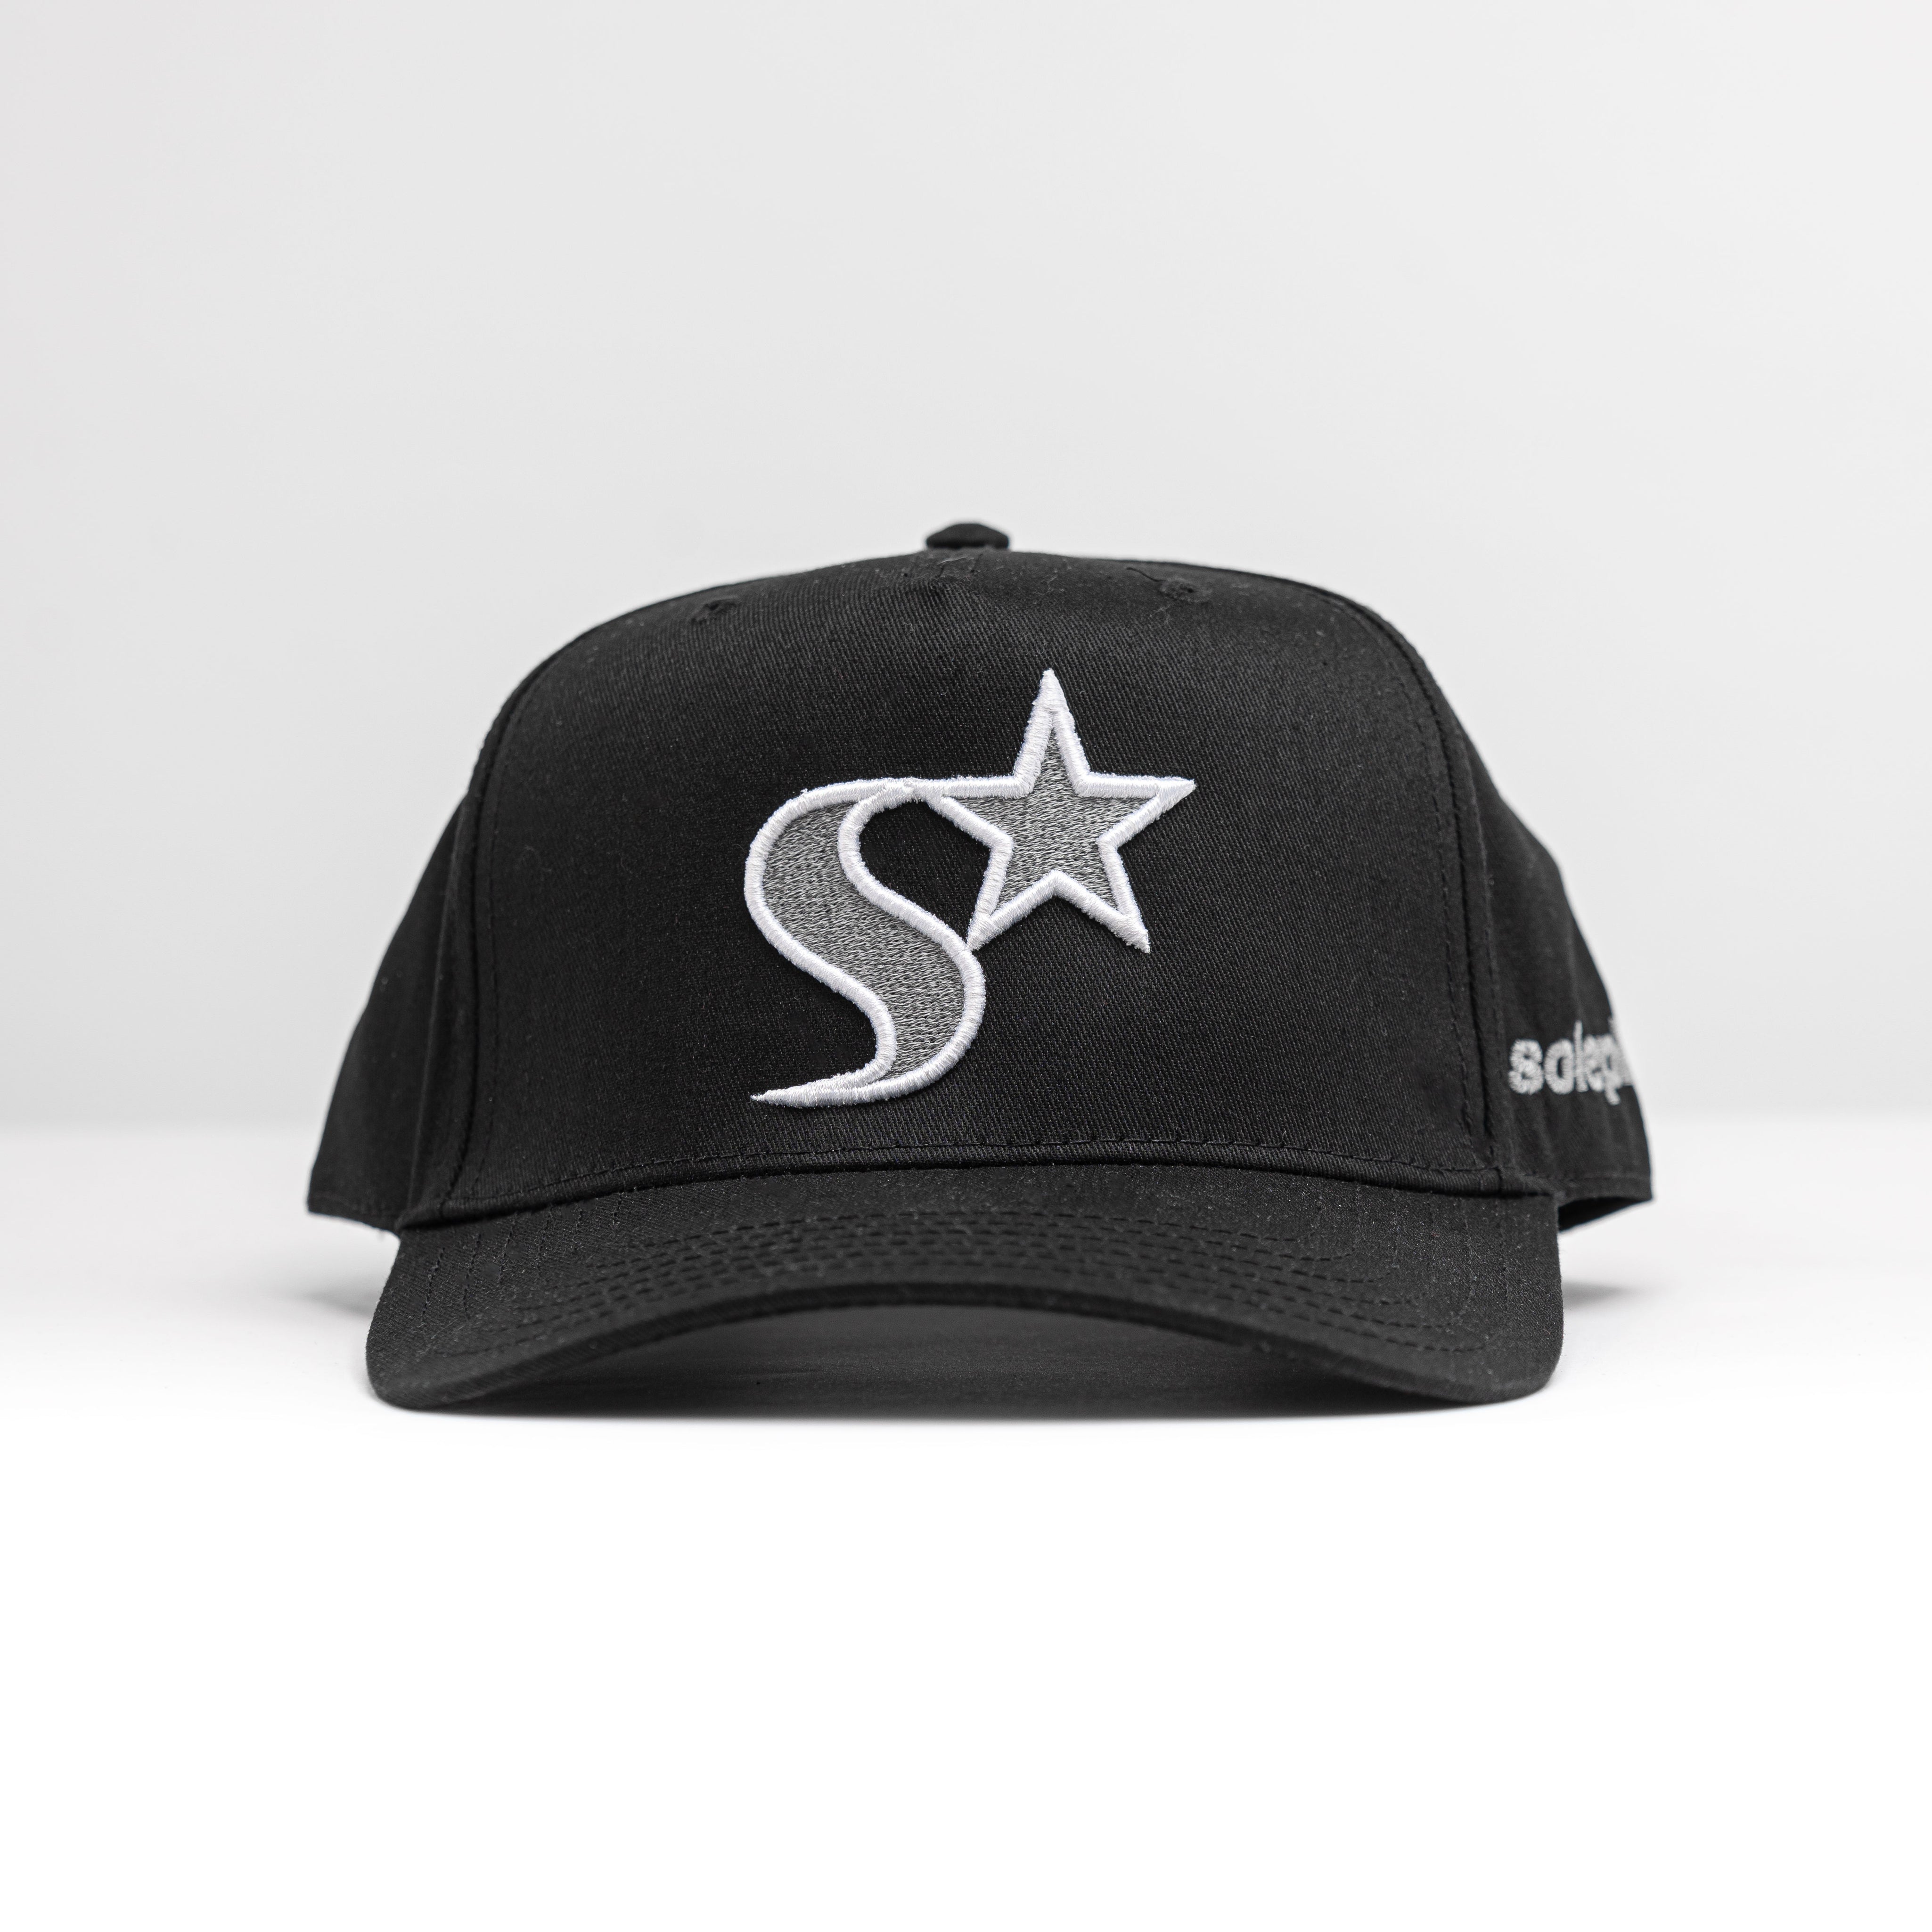 SOLEPLIER Reflective Star Hat Black